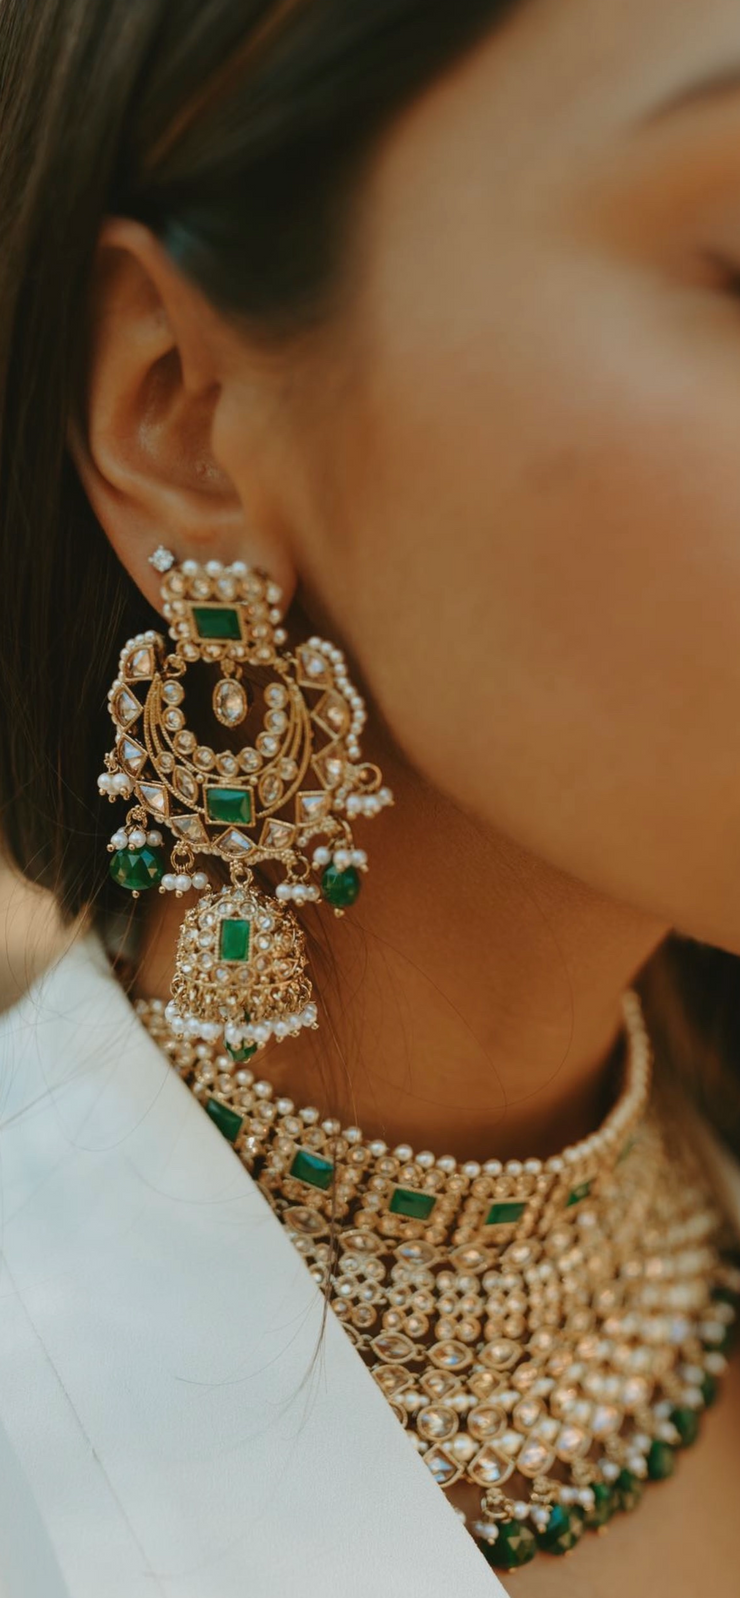 Mishita Necklace in Emerald Green